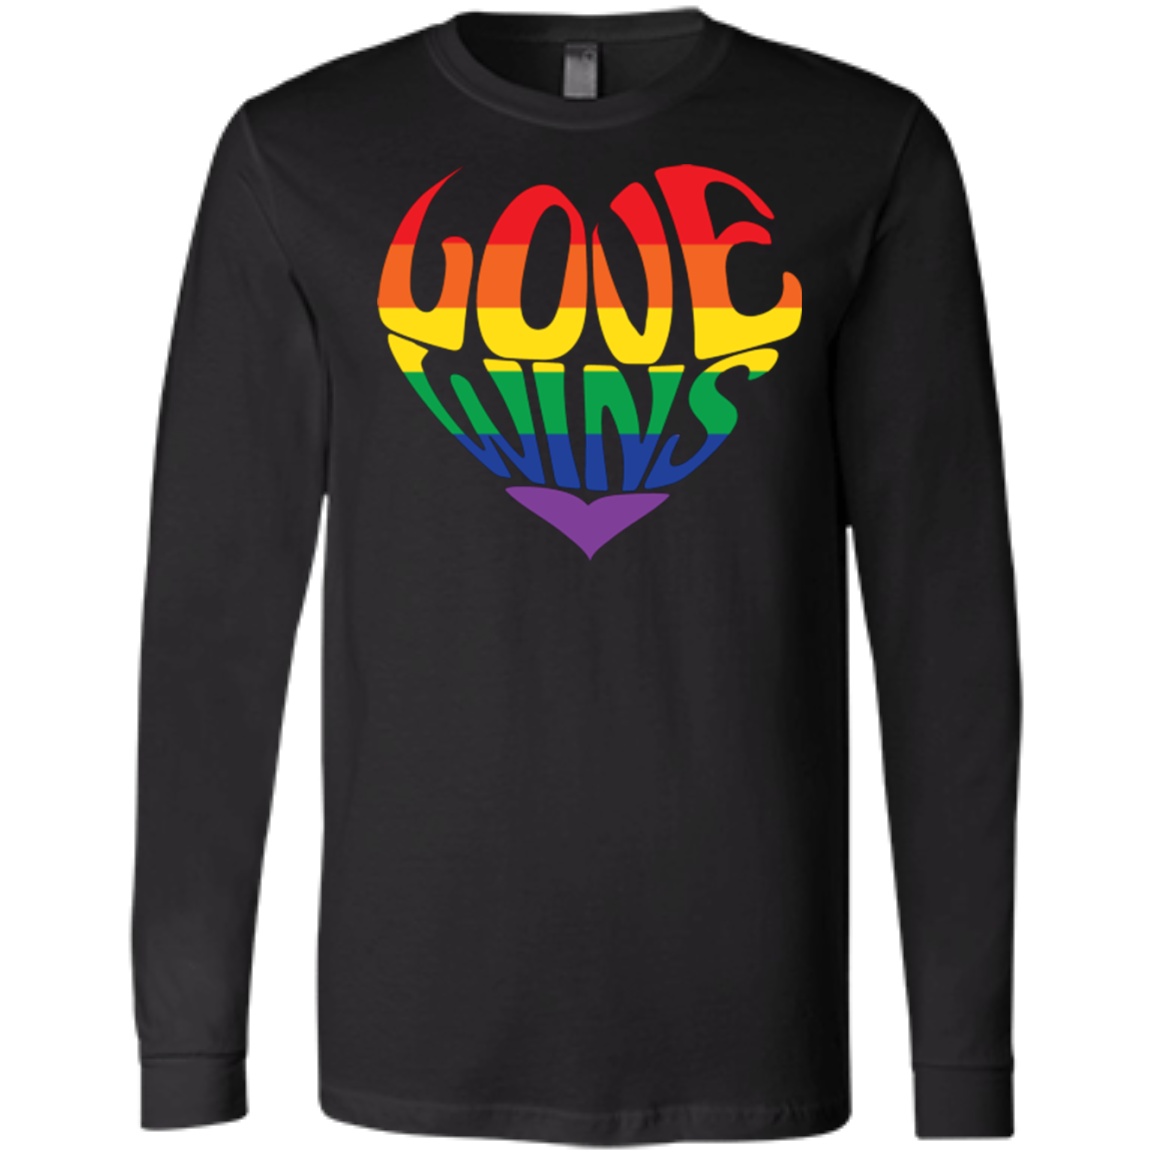 Love Wins black Full Sleeves round neck LGBTQ Pride Tshirt for men